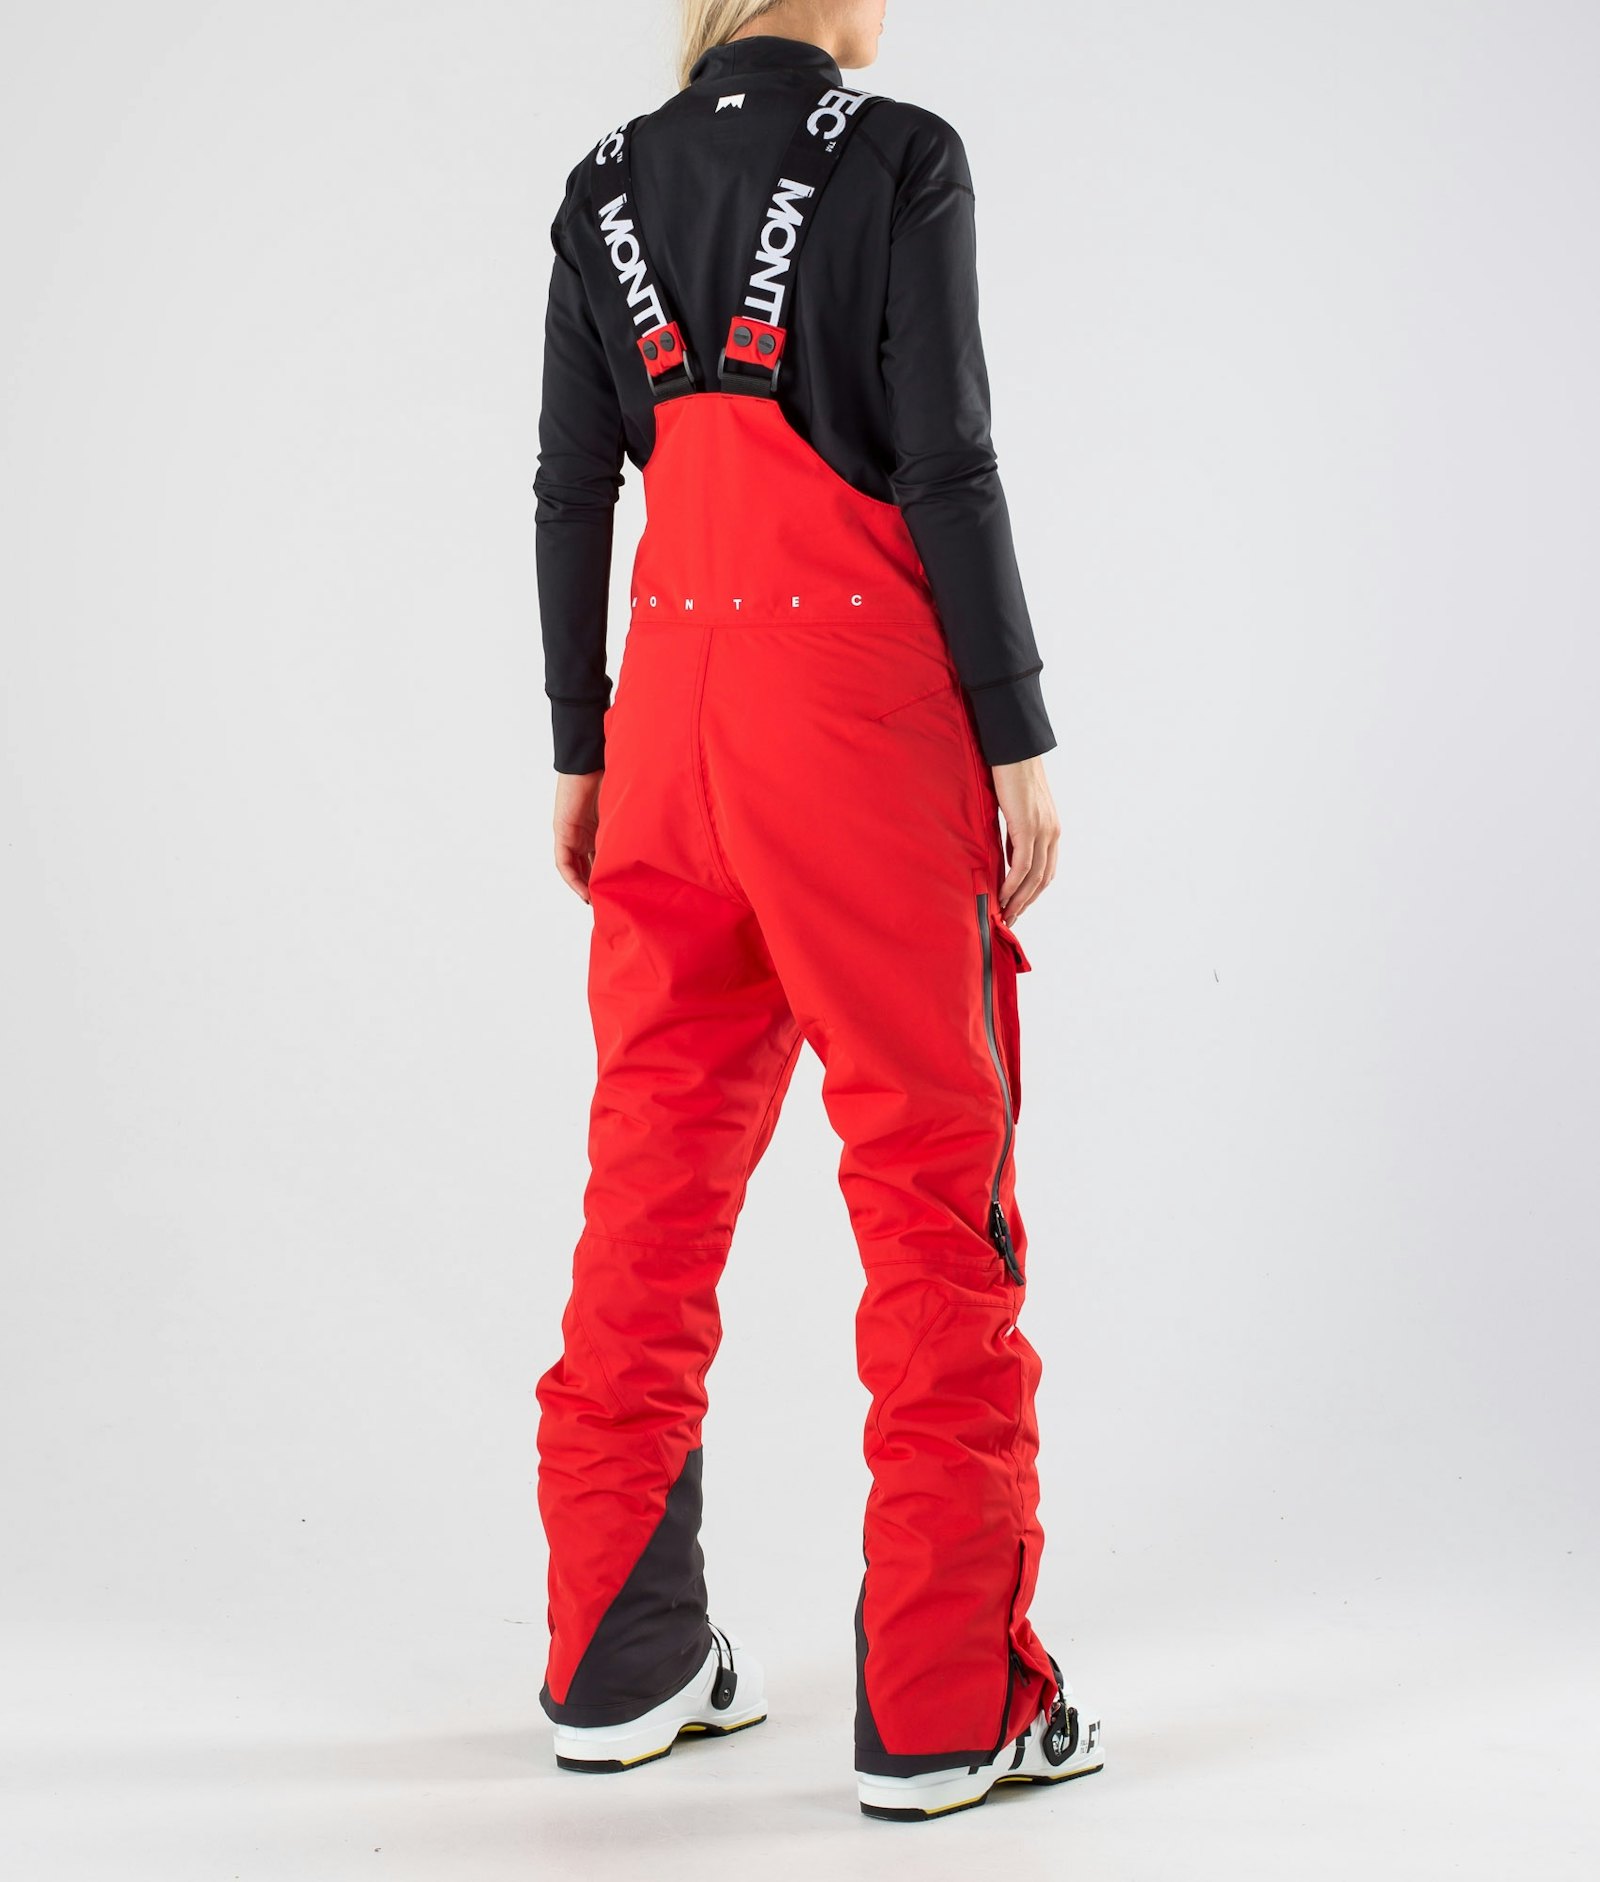 Fawk W 2019 Ski Pants Women Red